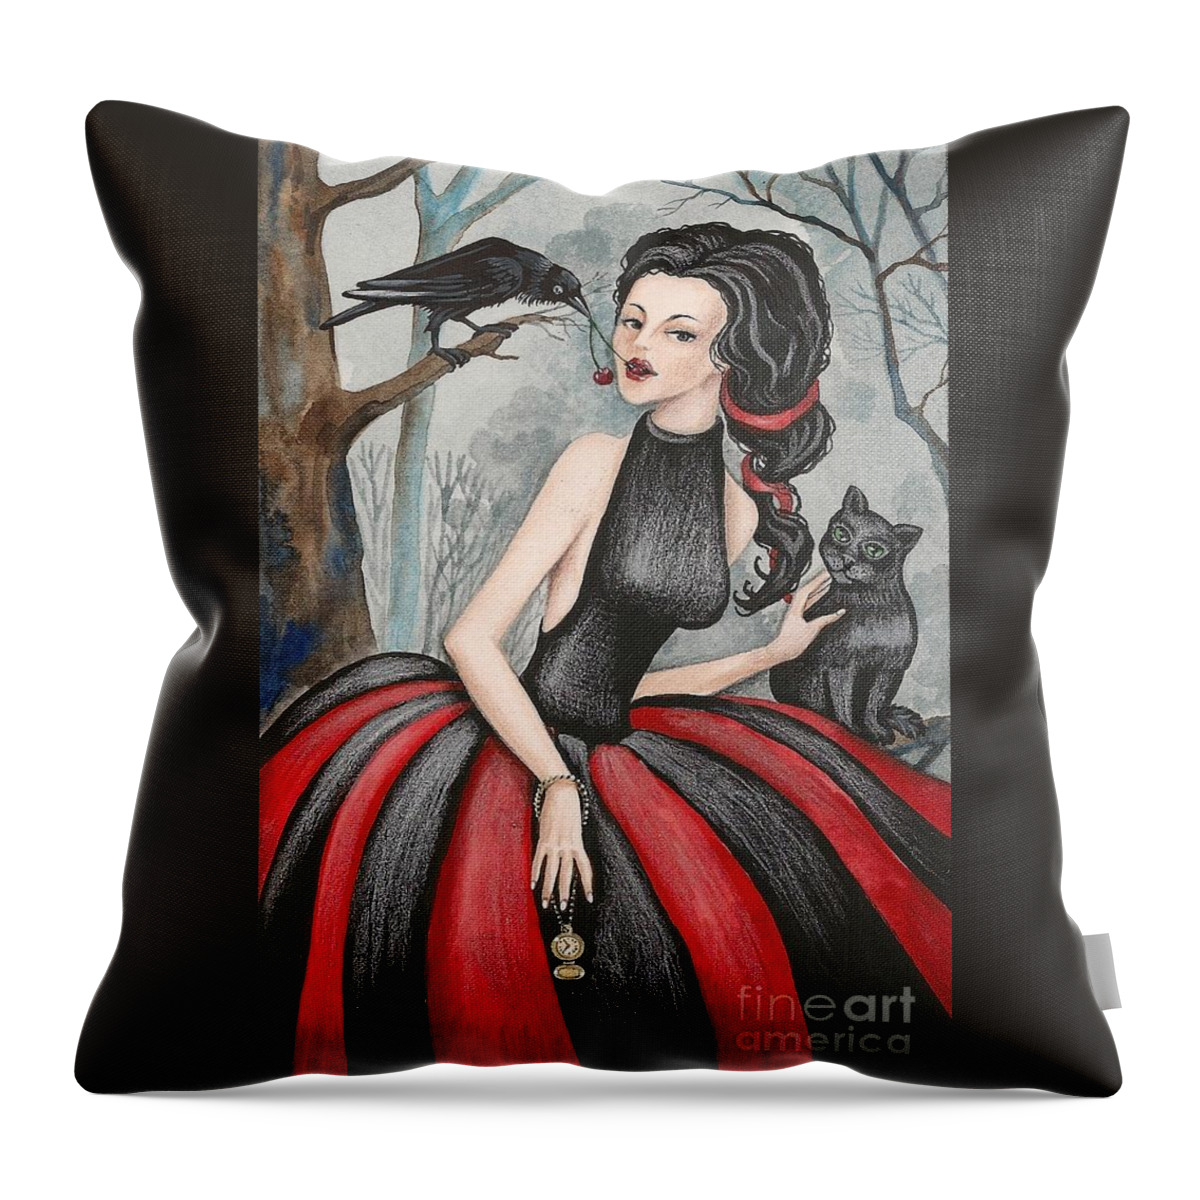 Print Throw Pillow featuring the painting Wild Cherry by Margaryta Yermolayeva